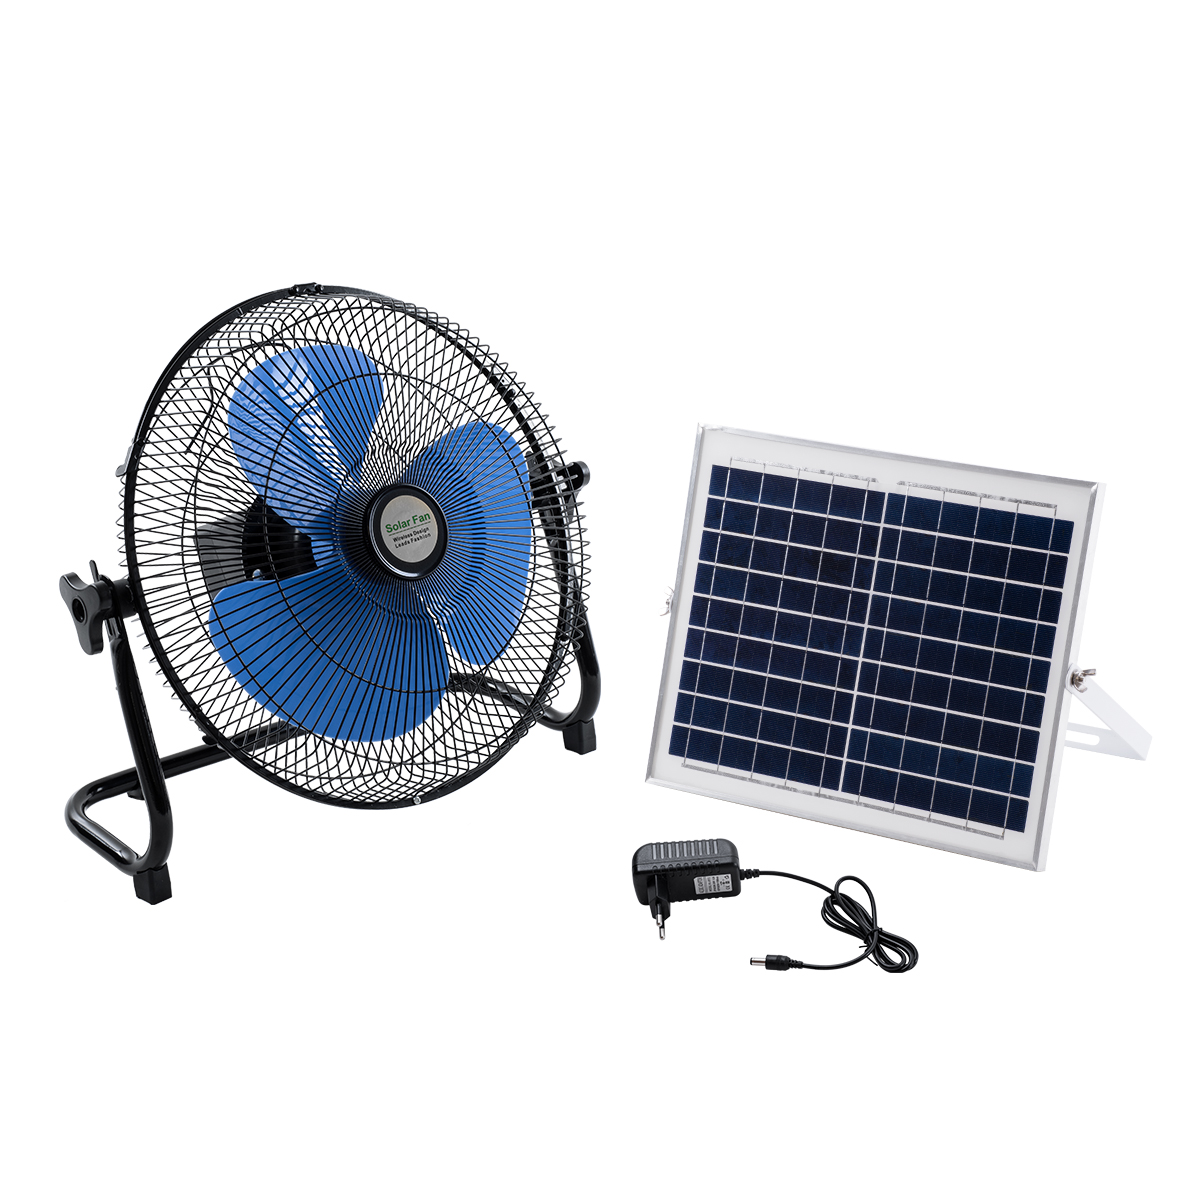 GloboStar® SOLARO-FAN 85351 Solar Fan Αυτόνομος Ηλιακός Επιδαπέδιος Ανεμιστήρας 25W 2 Λειτουργιών Ρεύματος με AC 220-240V ή με Φωτοβολταϊκό Panel 9V 12W & Επαναφορτιζόμενη Μπαταρία Li-ion 7.4V 4400mAh – 12 Ταχύτητες – Ενσωματωμένο USB 2.0 Charger Συσκευών – IP20 – Μ42 x Π20 x Υ35cm – Μαύρο & Μπλε – 2 Years Warranty